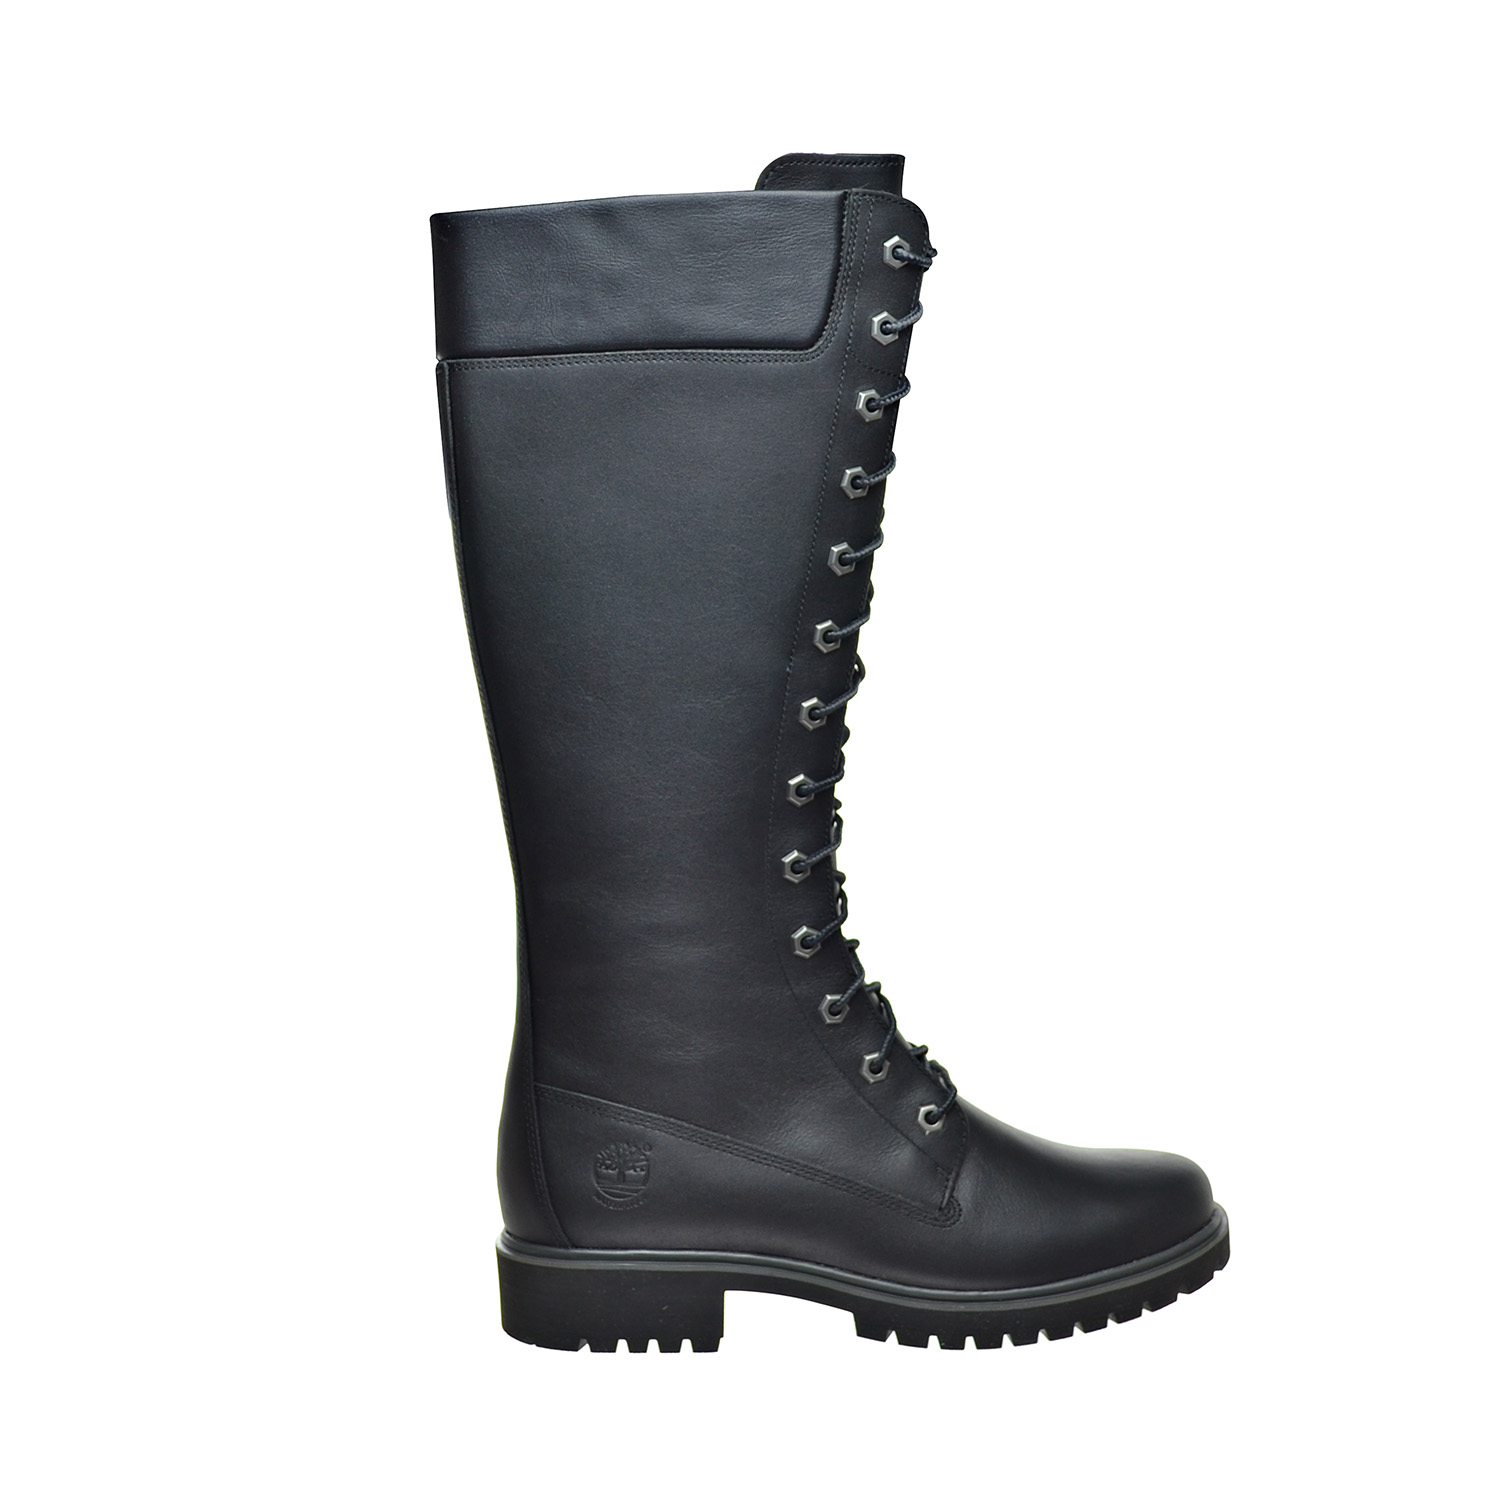 Womens Waterproof Boots Black tb08632a 